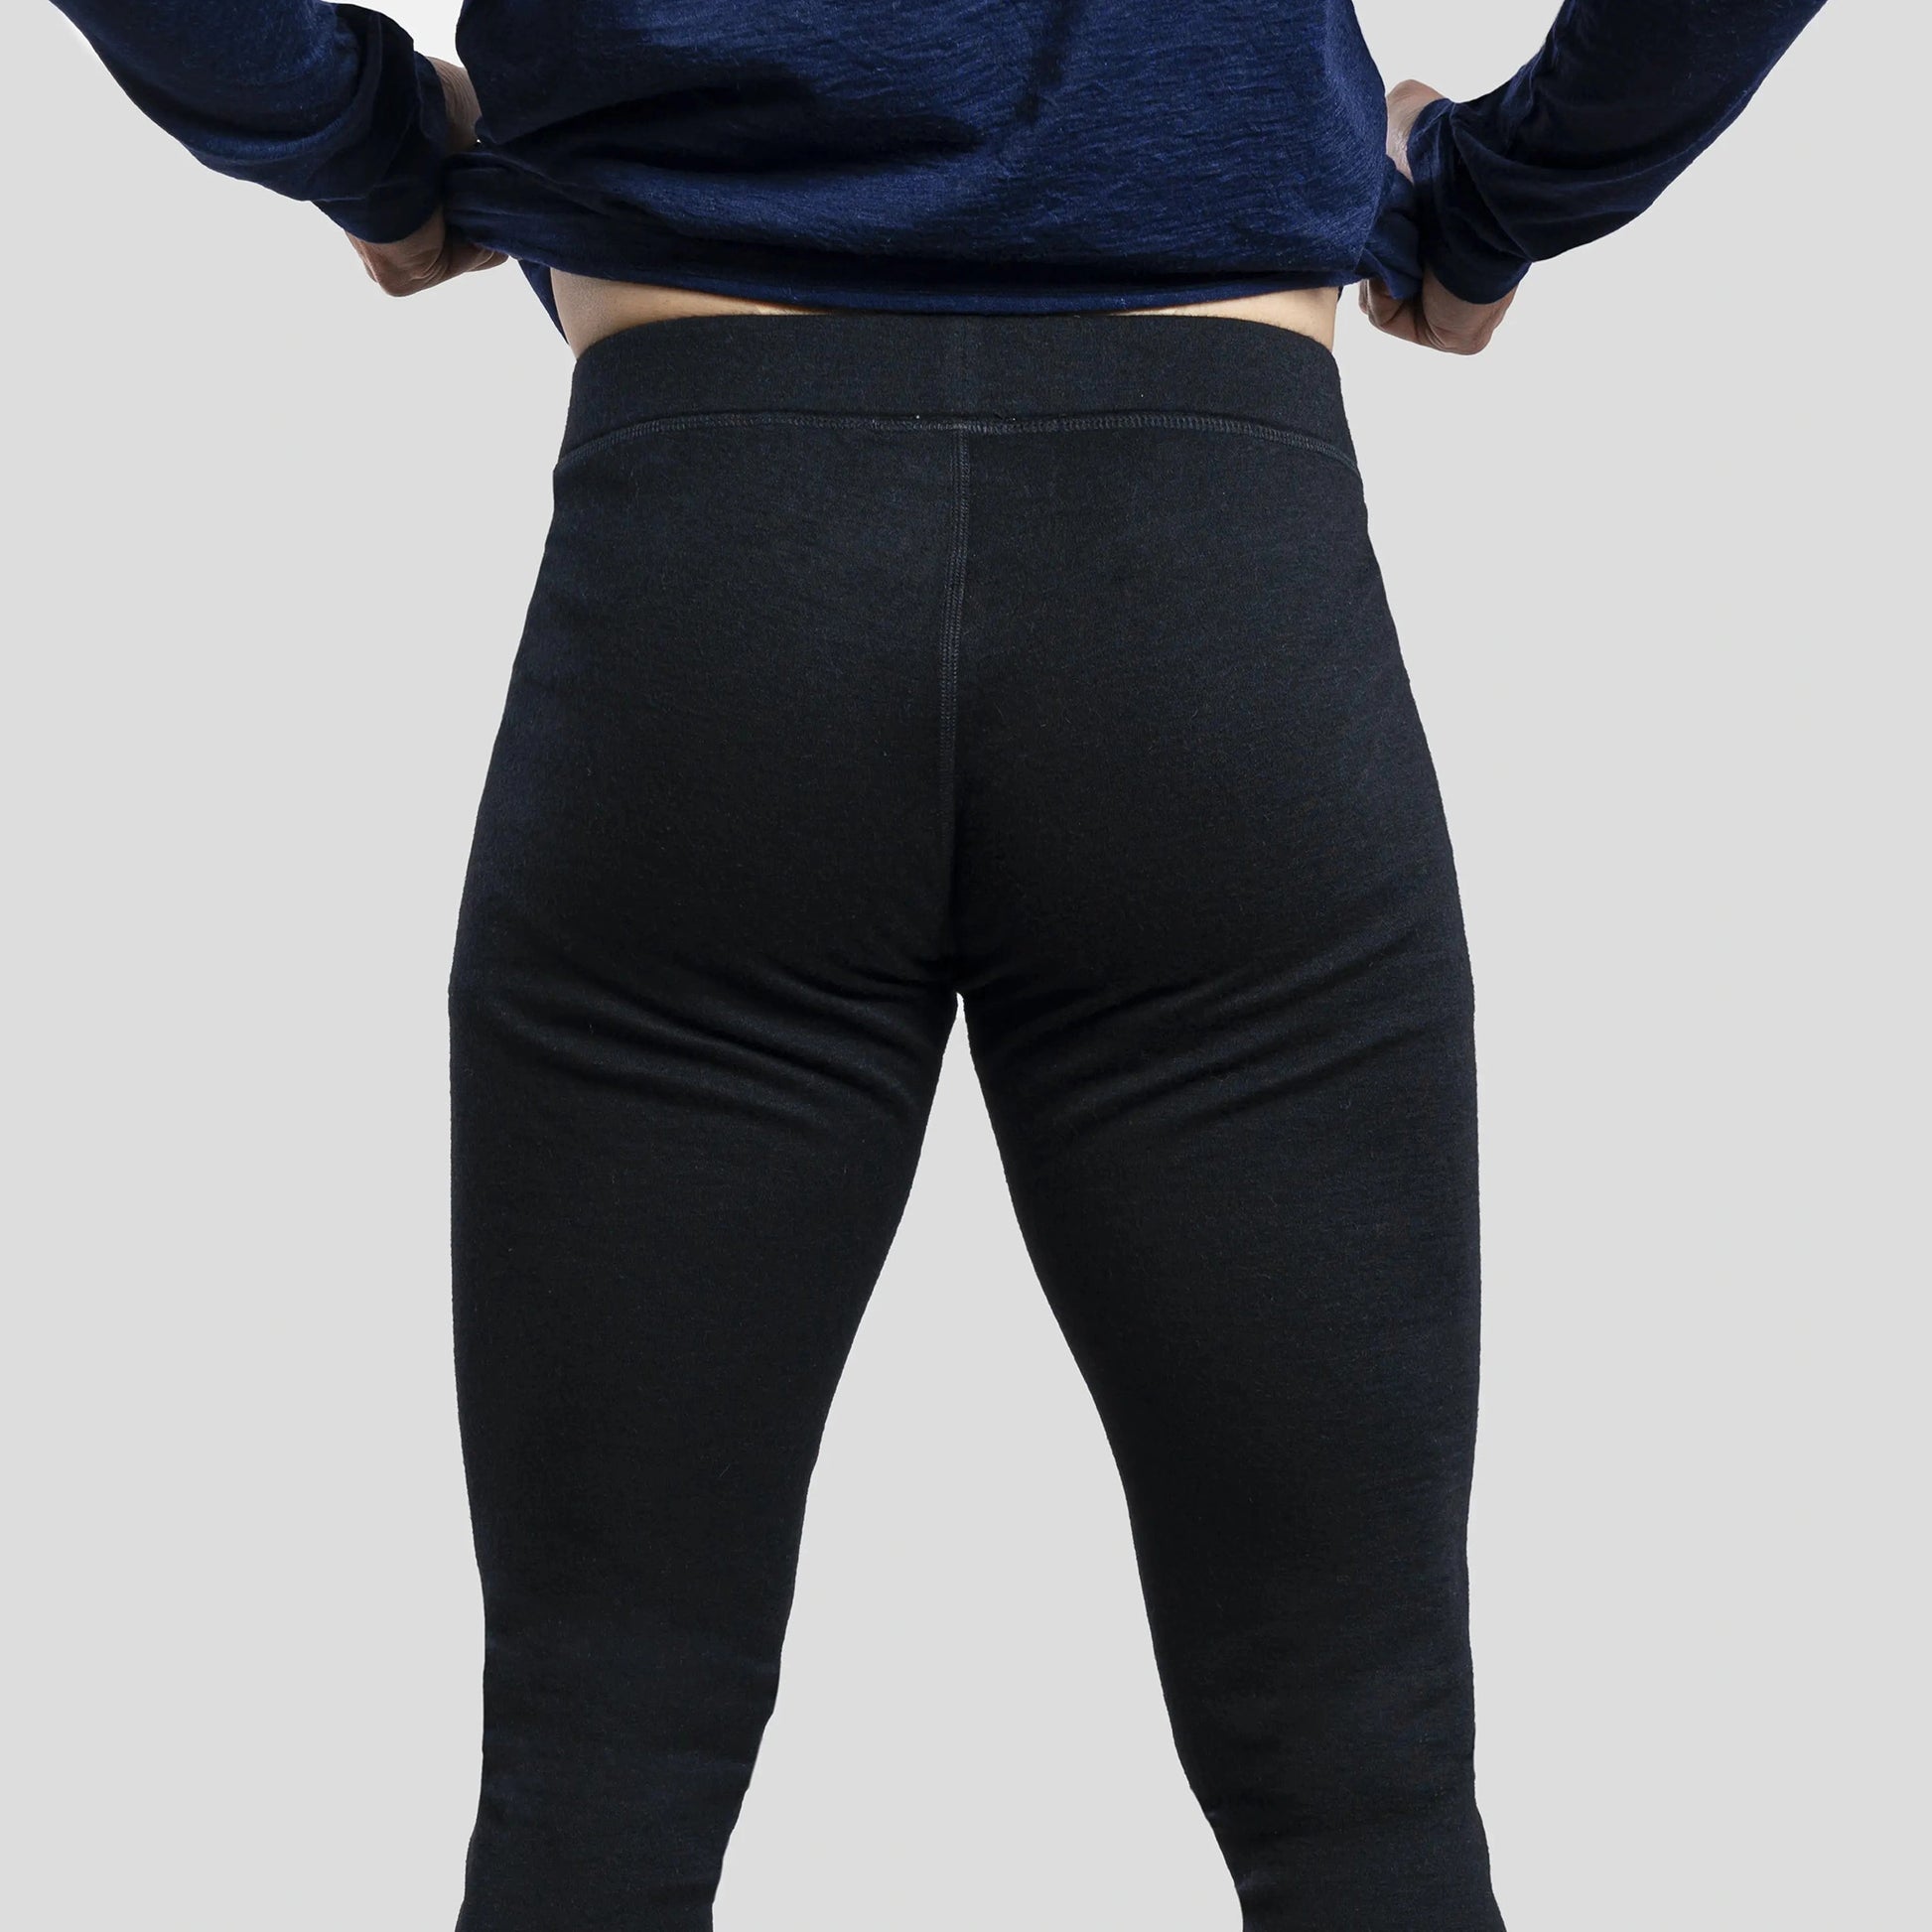 The most needed ski wool leggings for men color black